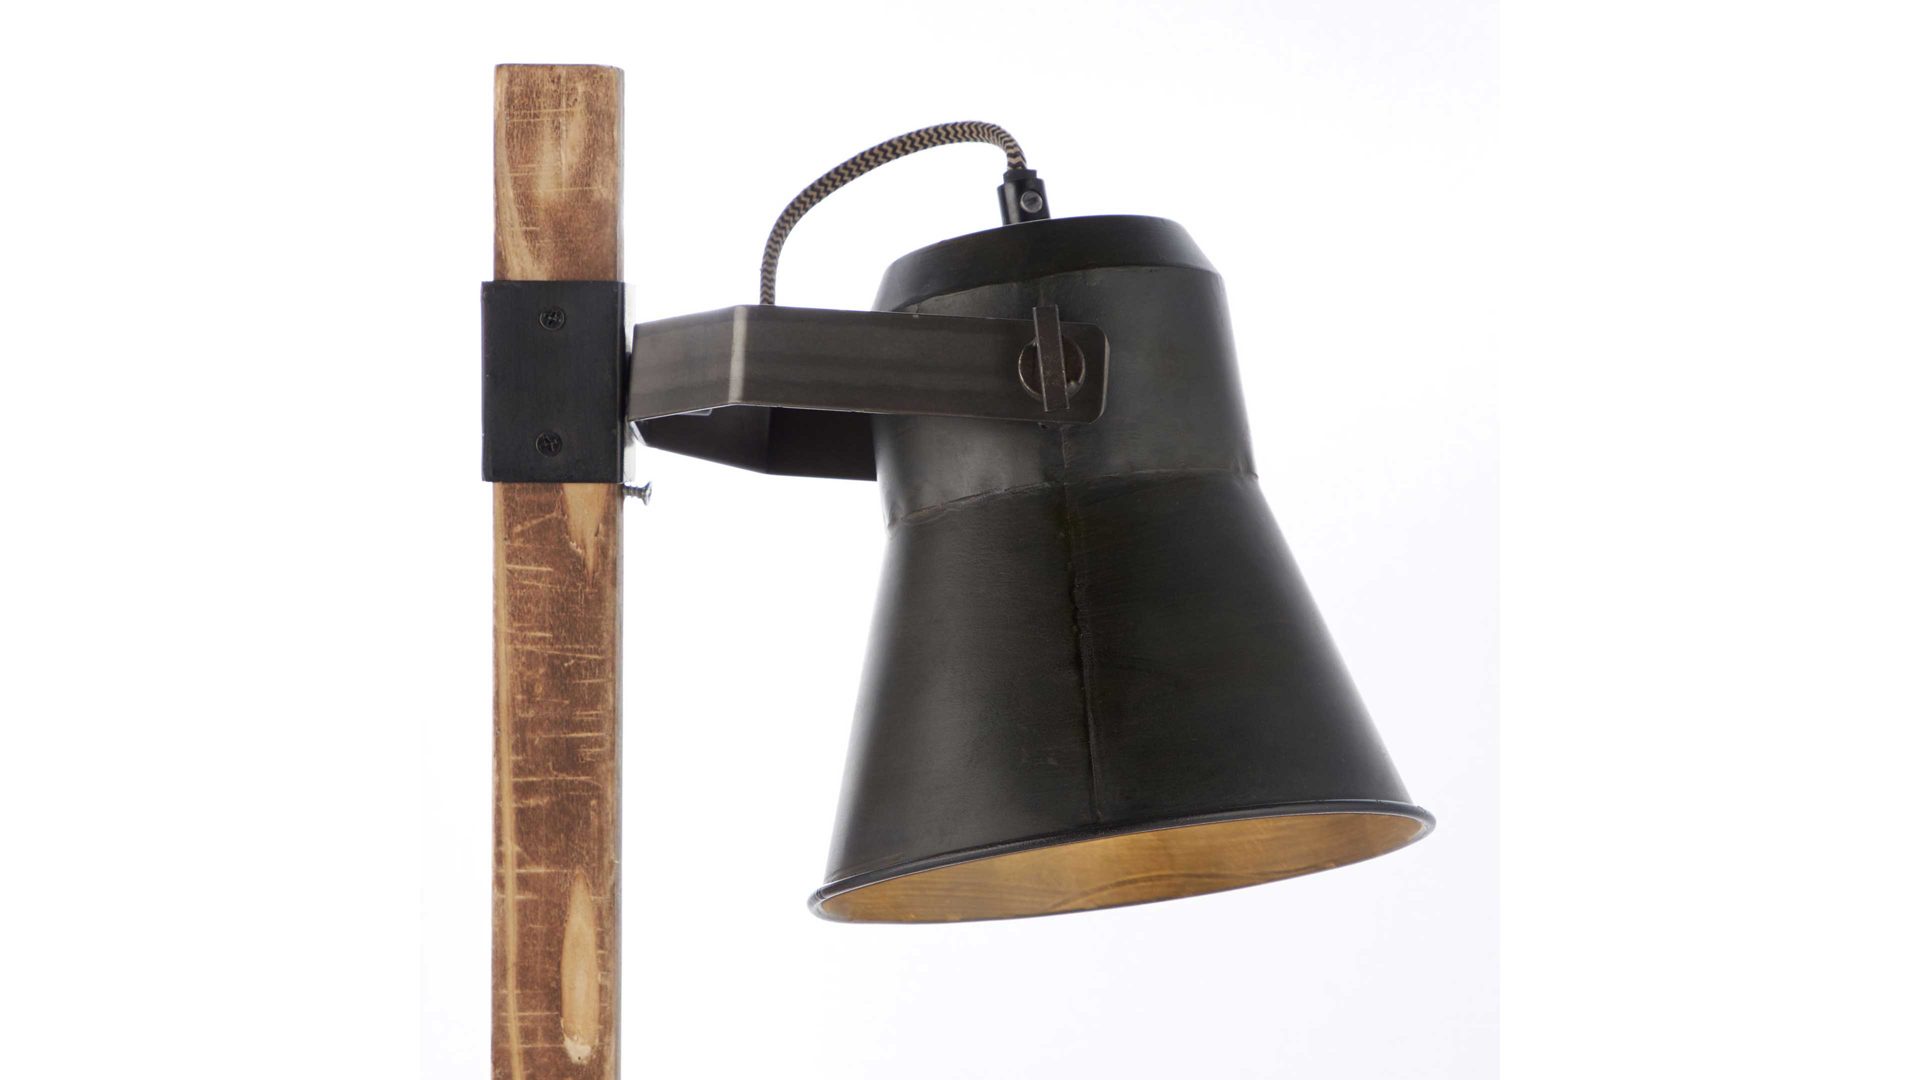 Brilliant Tischlampe Plow, Holz schwarzer ca. Cuxhaven, Bremerhaven Lamstedt, Stahl & – 55 Höhe cm